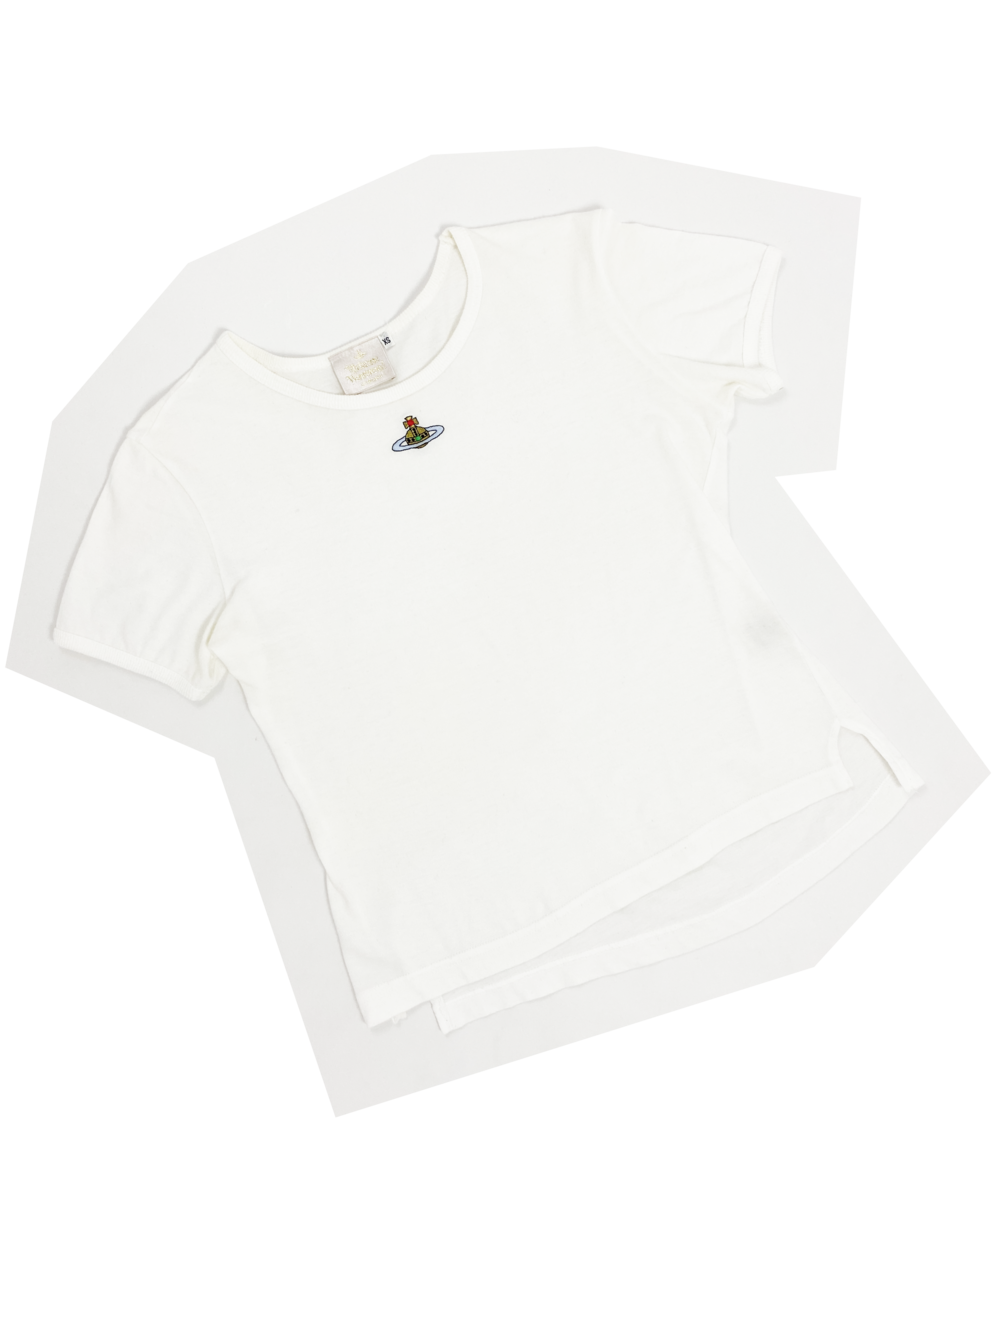 Vivienne Westwood 90s orb logo t-shirt — JAMES VELORIA